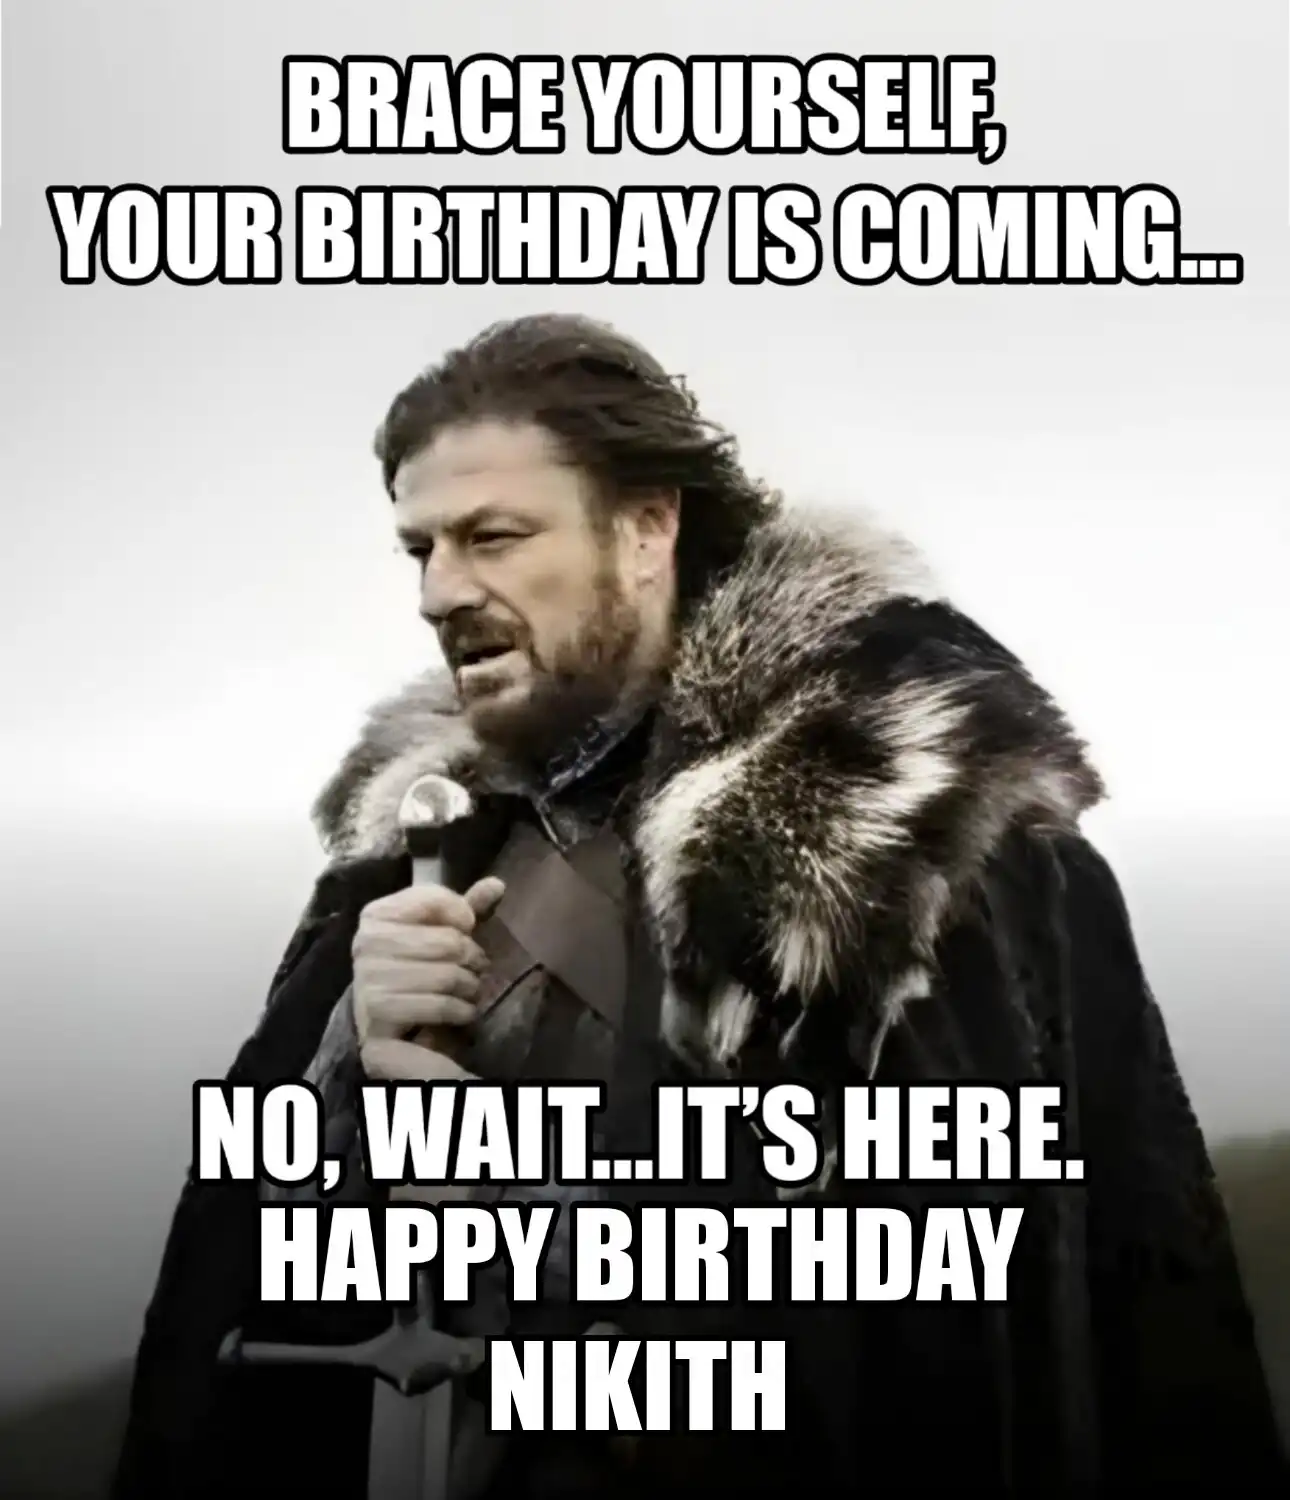 Happy Birthday Nikith Brace Yourself Your Birthday Is Coming Meme